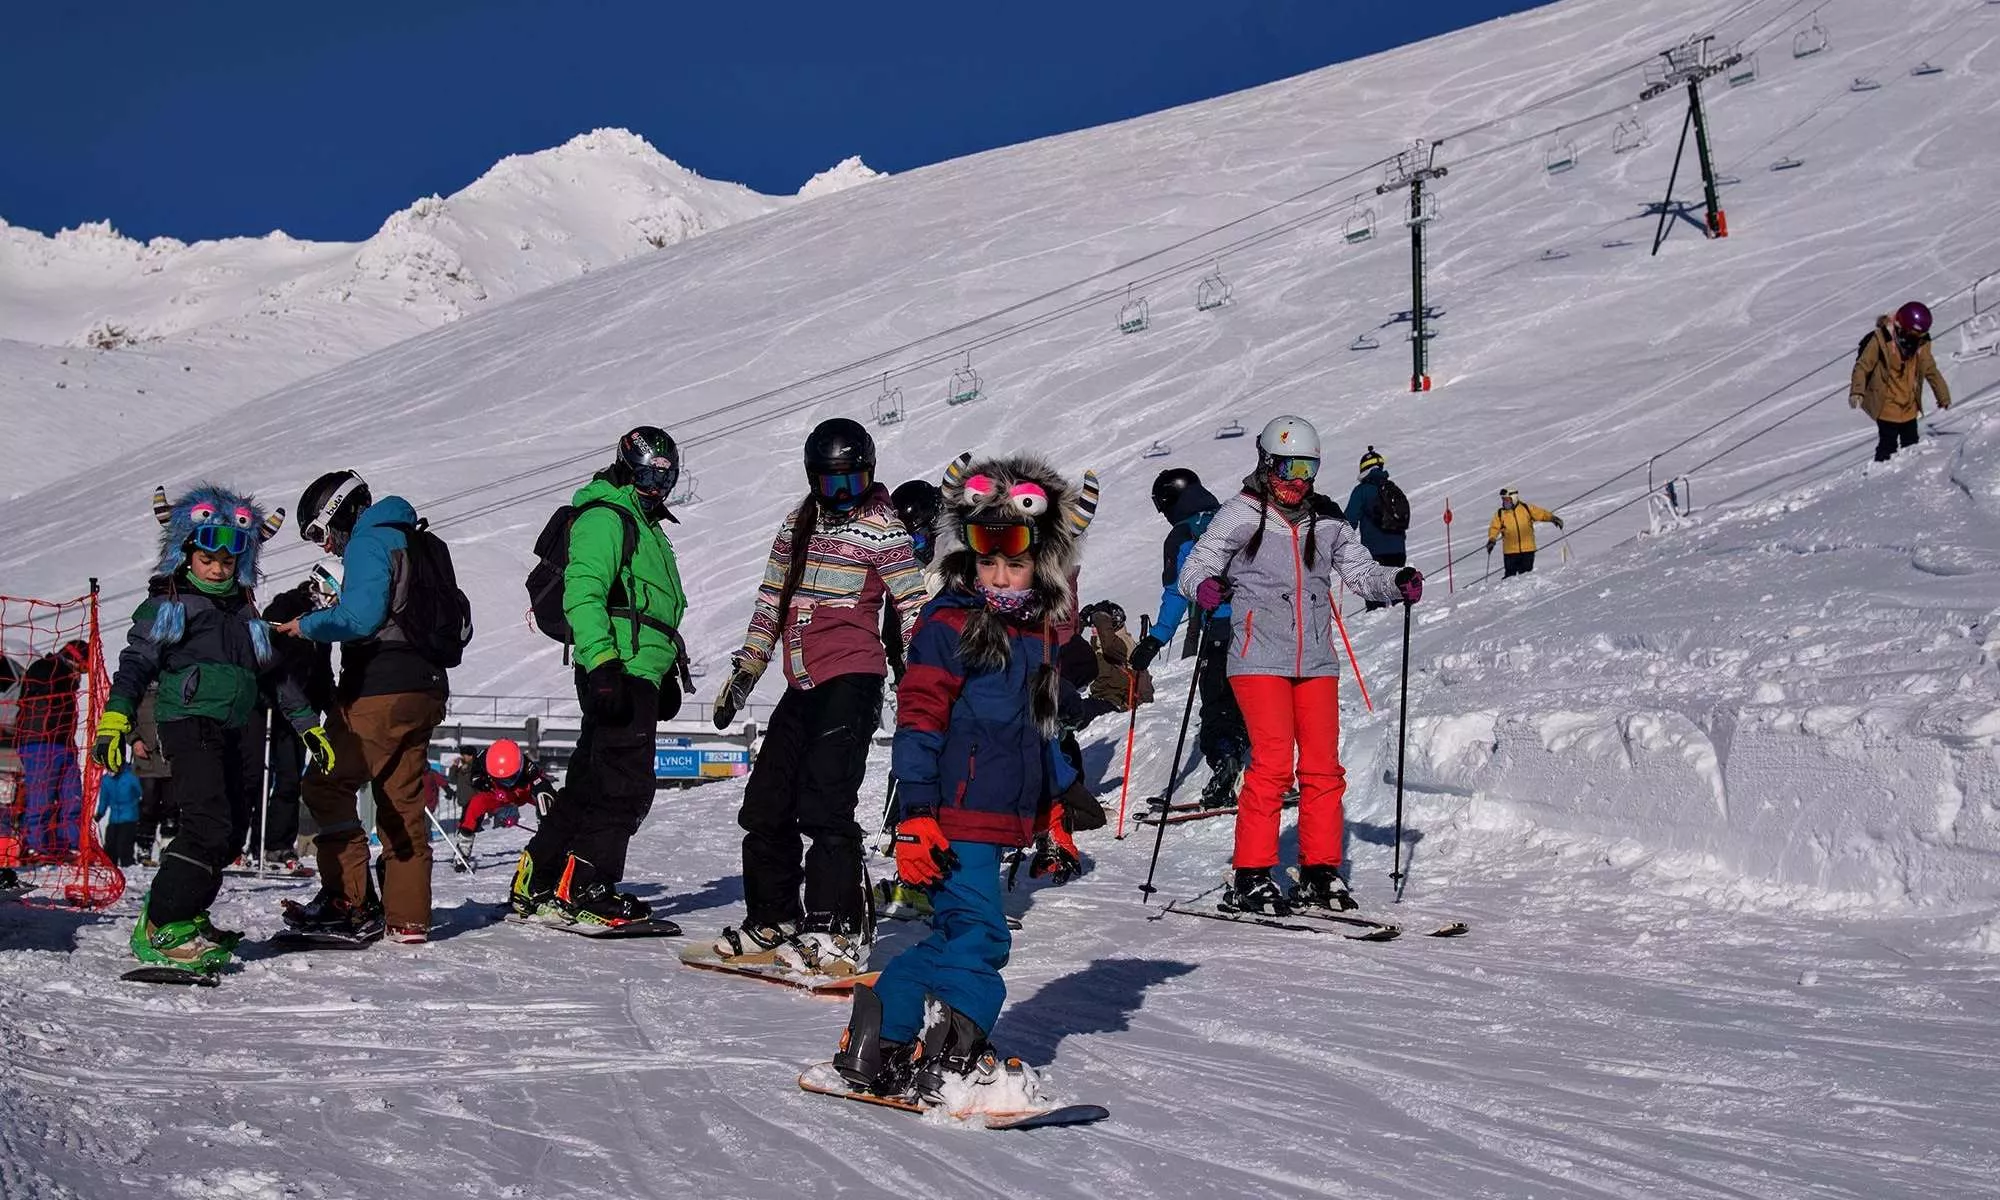 Mambo Ski Rent in Italy, Europe | Snowboarding,Skiing - Rated 0.9